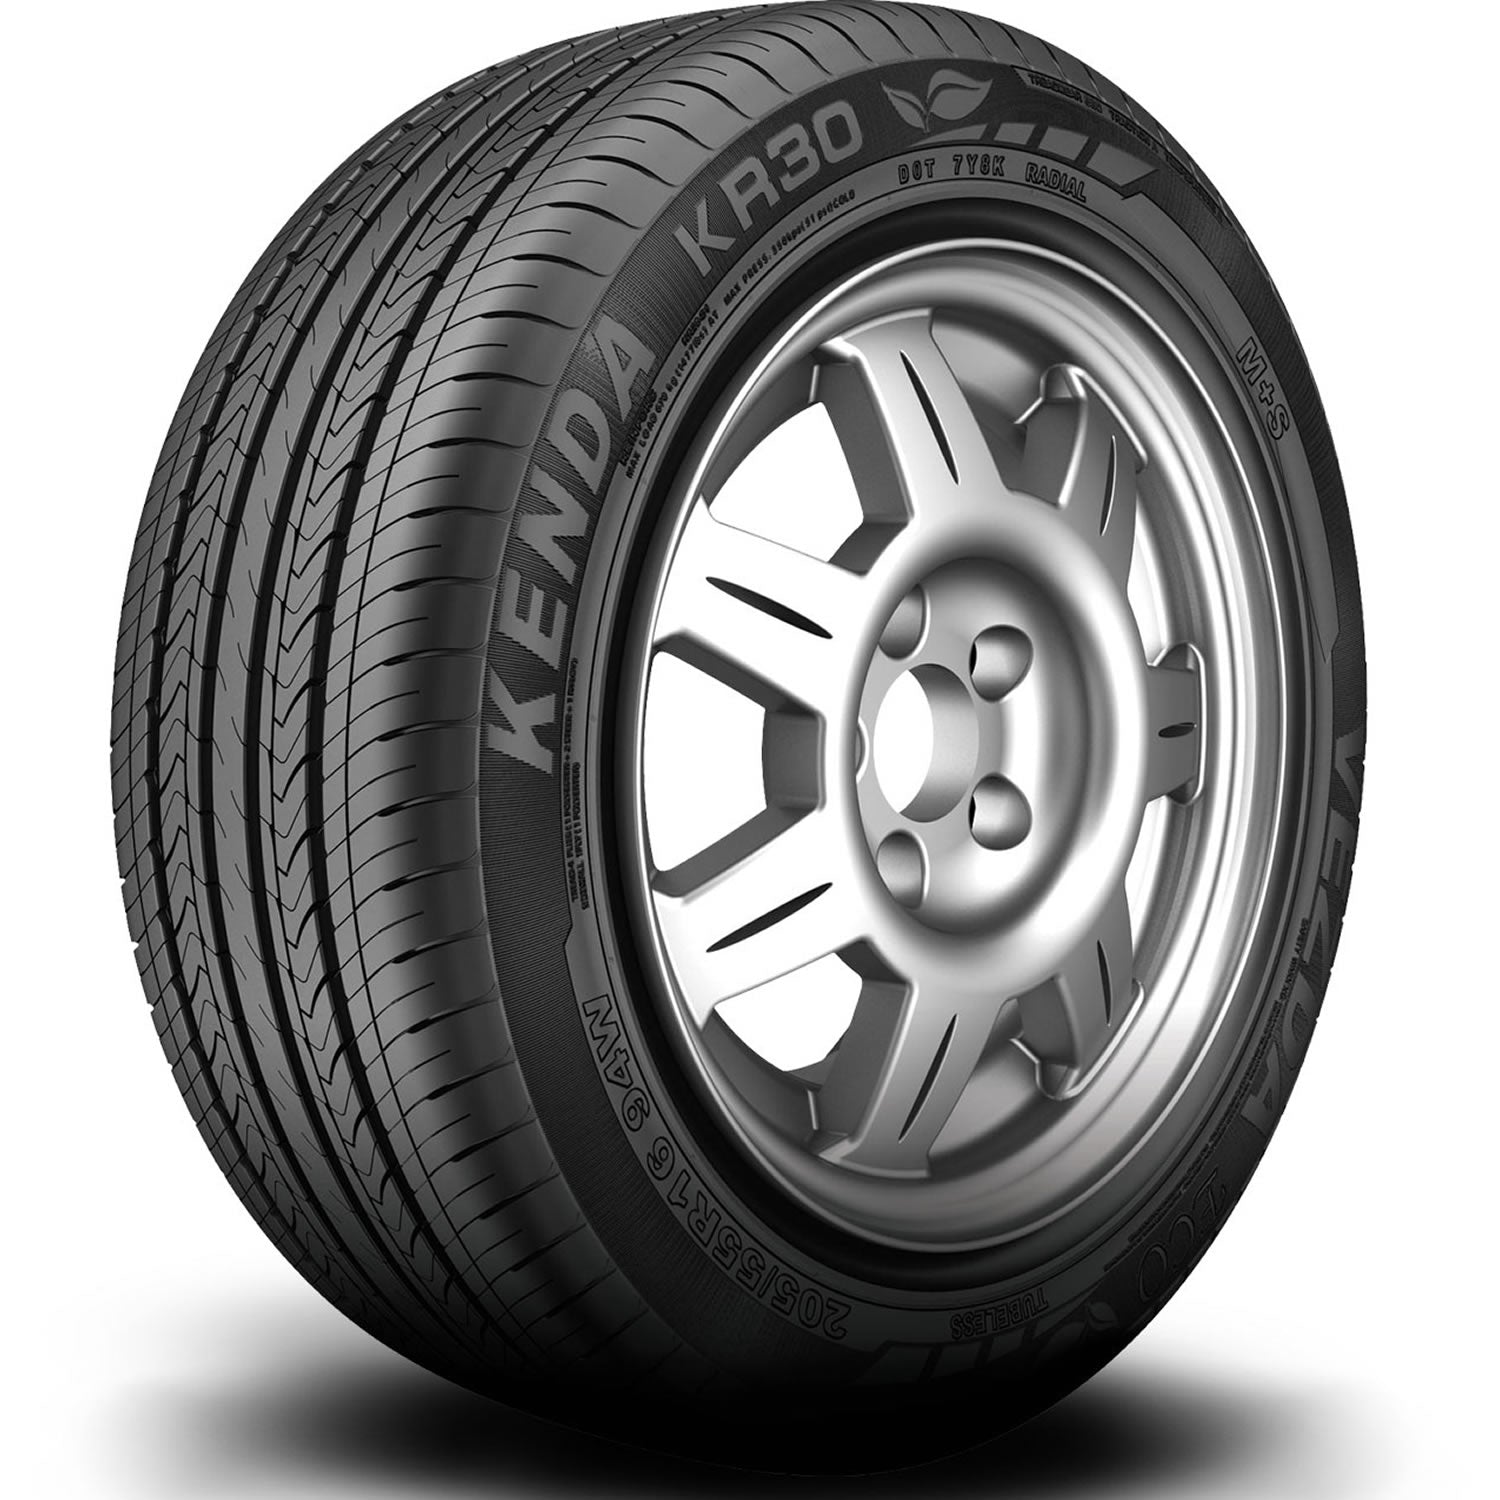 KENDA VEZDA ECO 195/50R15 (22.7X7.9R 15) Tires